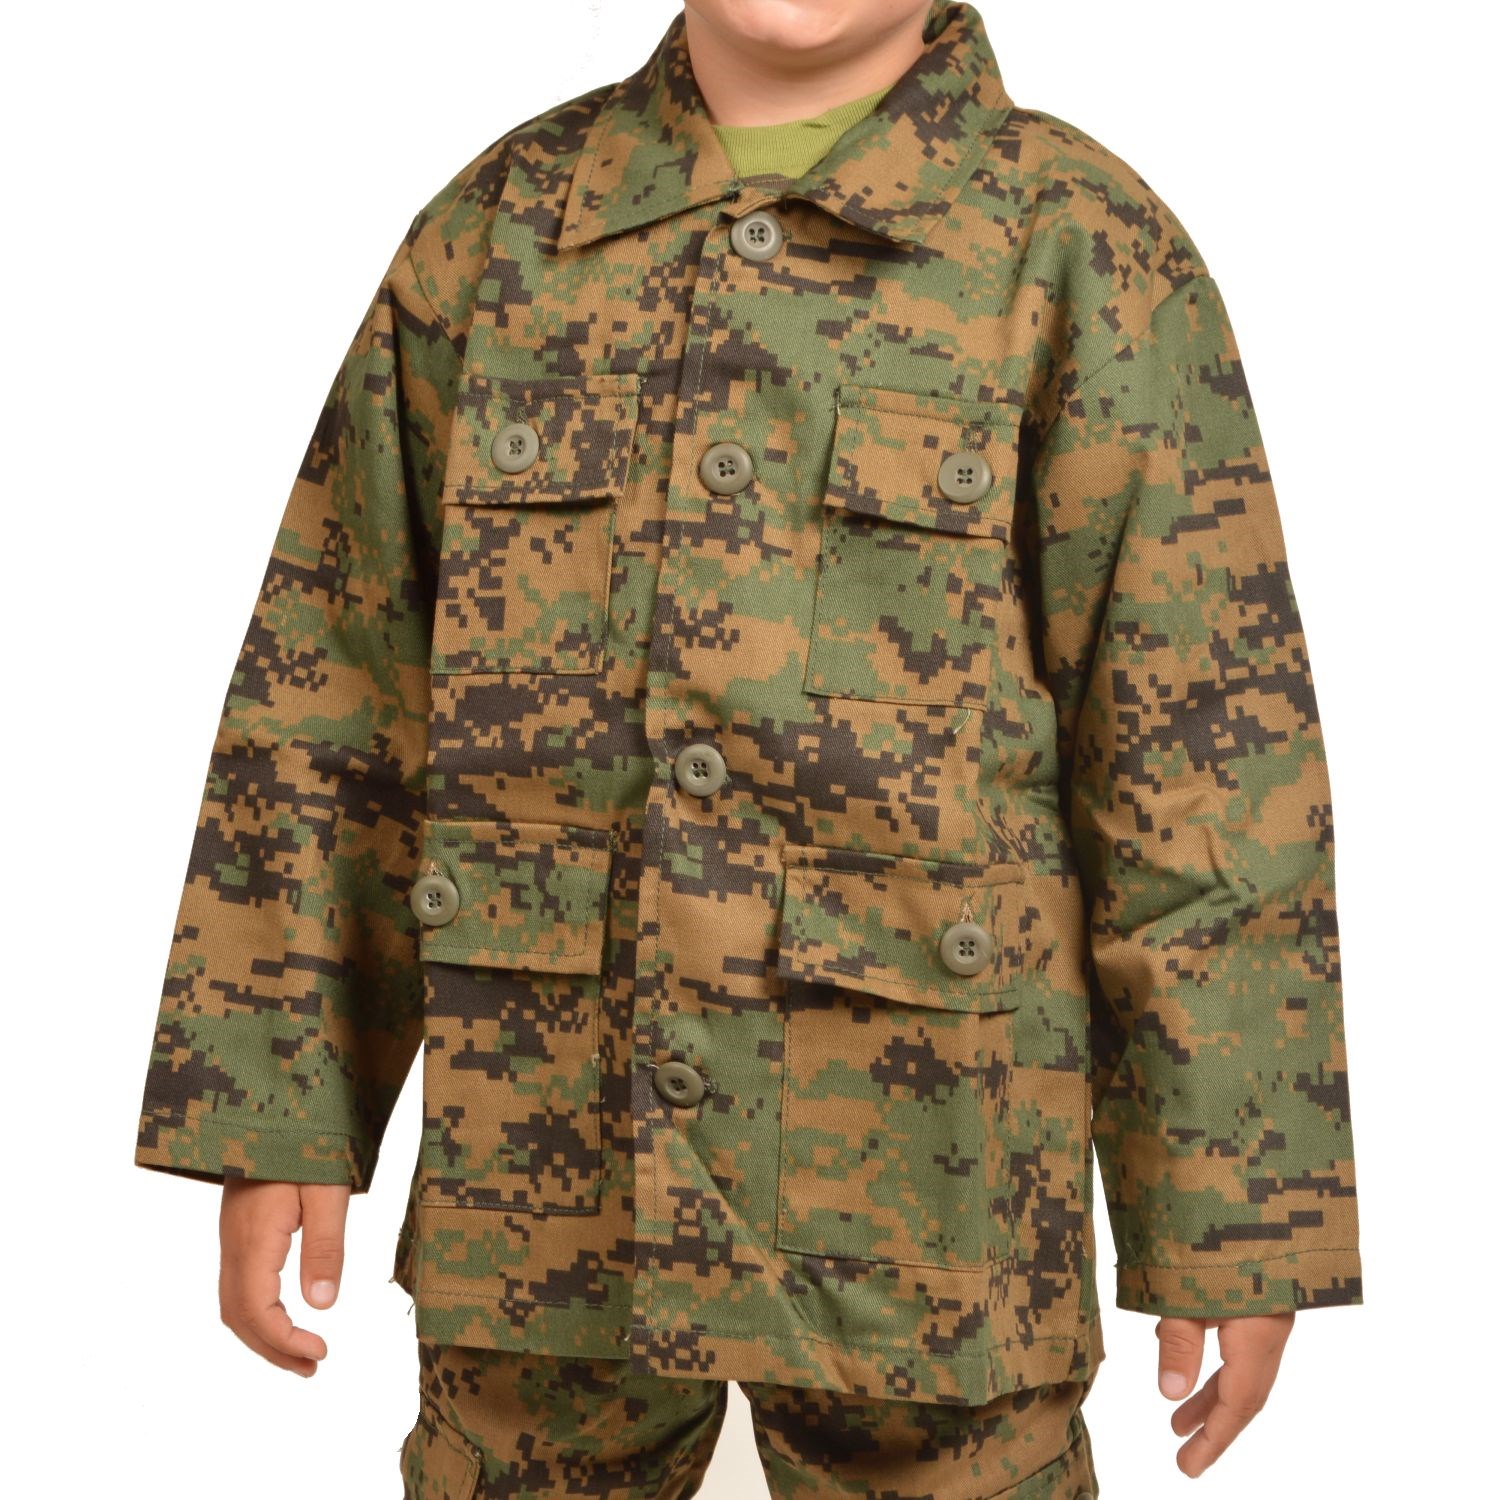 Rothco 66215 Digital Woodland Camouflage BDU Shirt for Kids